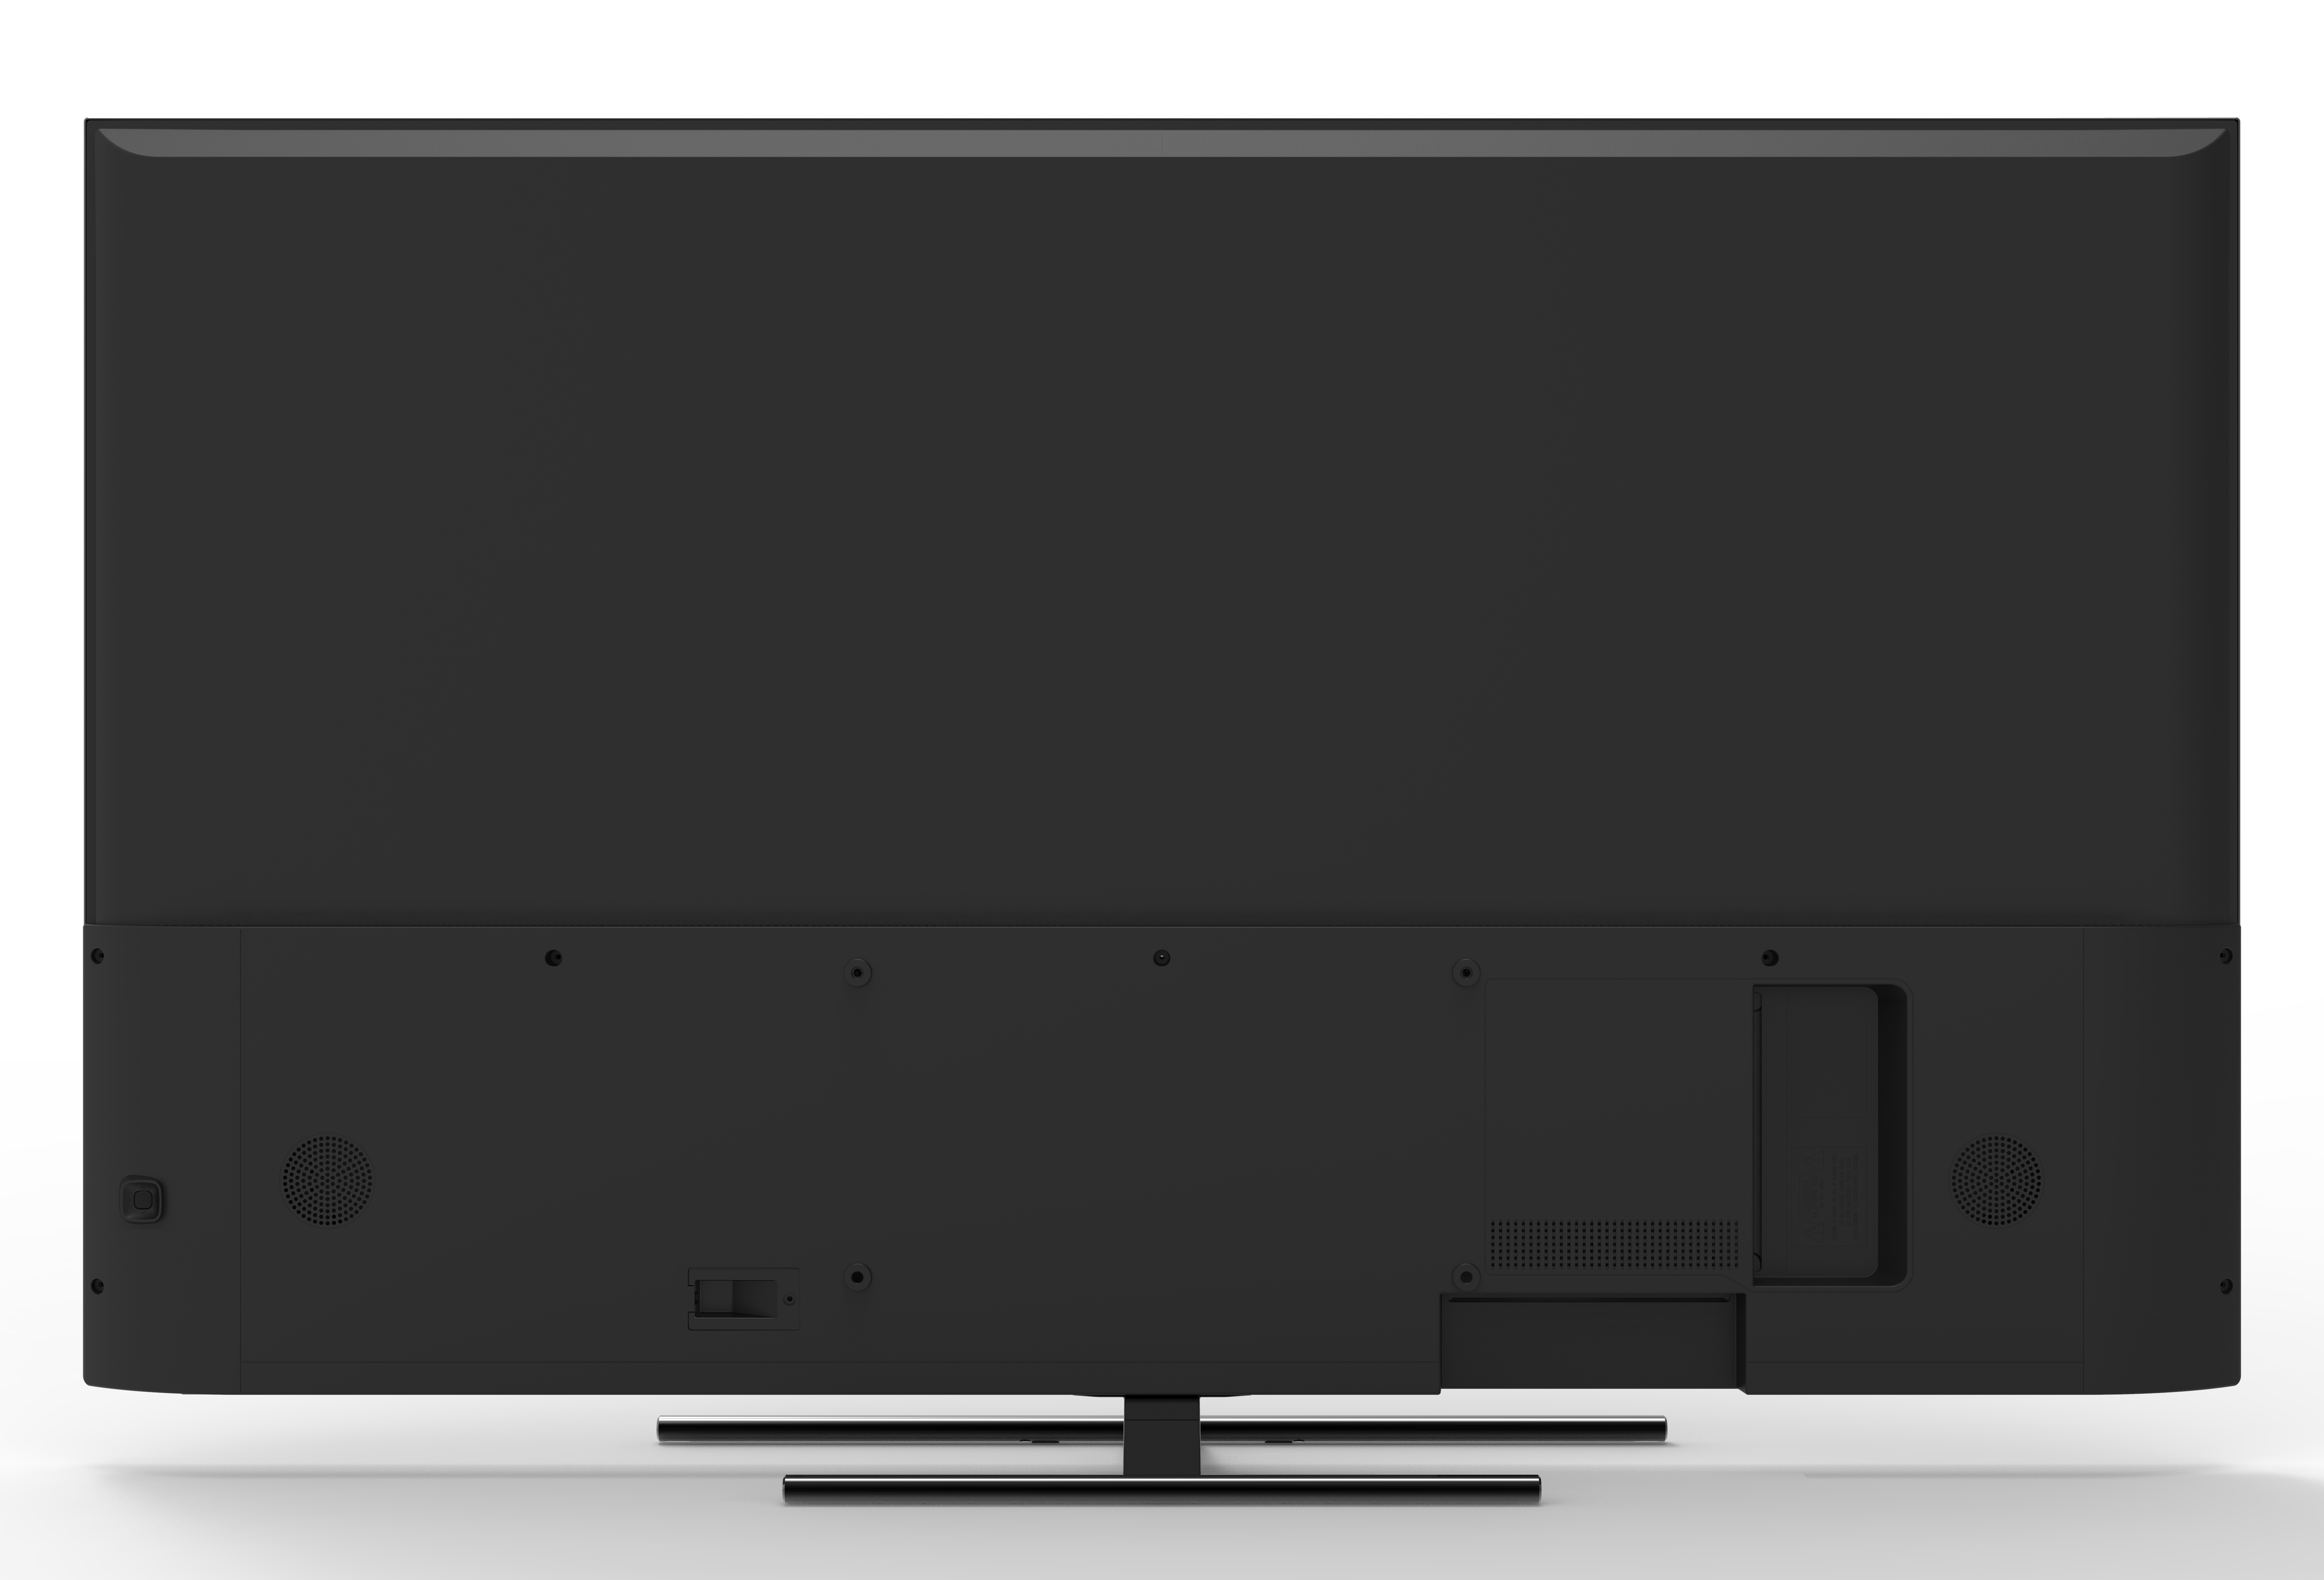 Haier 65 диагональ. Haier 55 Smart TV AX. Телевизор Haier 55 Smart TV AX Pro. Haier 65 Smart TV BX. Haier 65 Smart TV AX Pro.